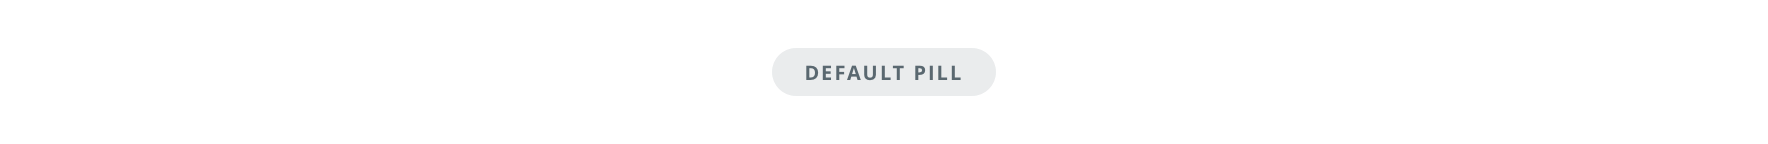 Default pills